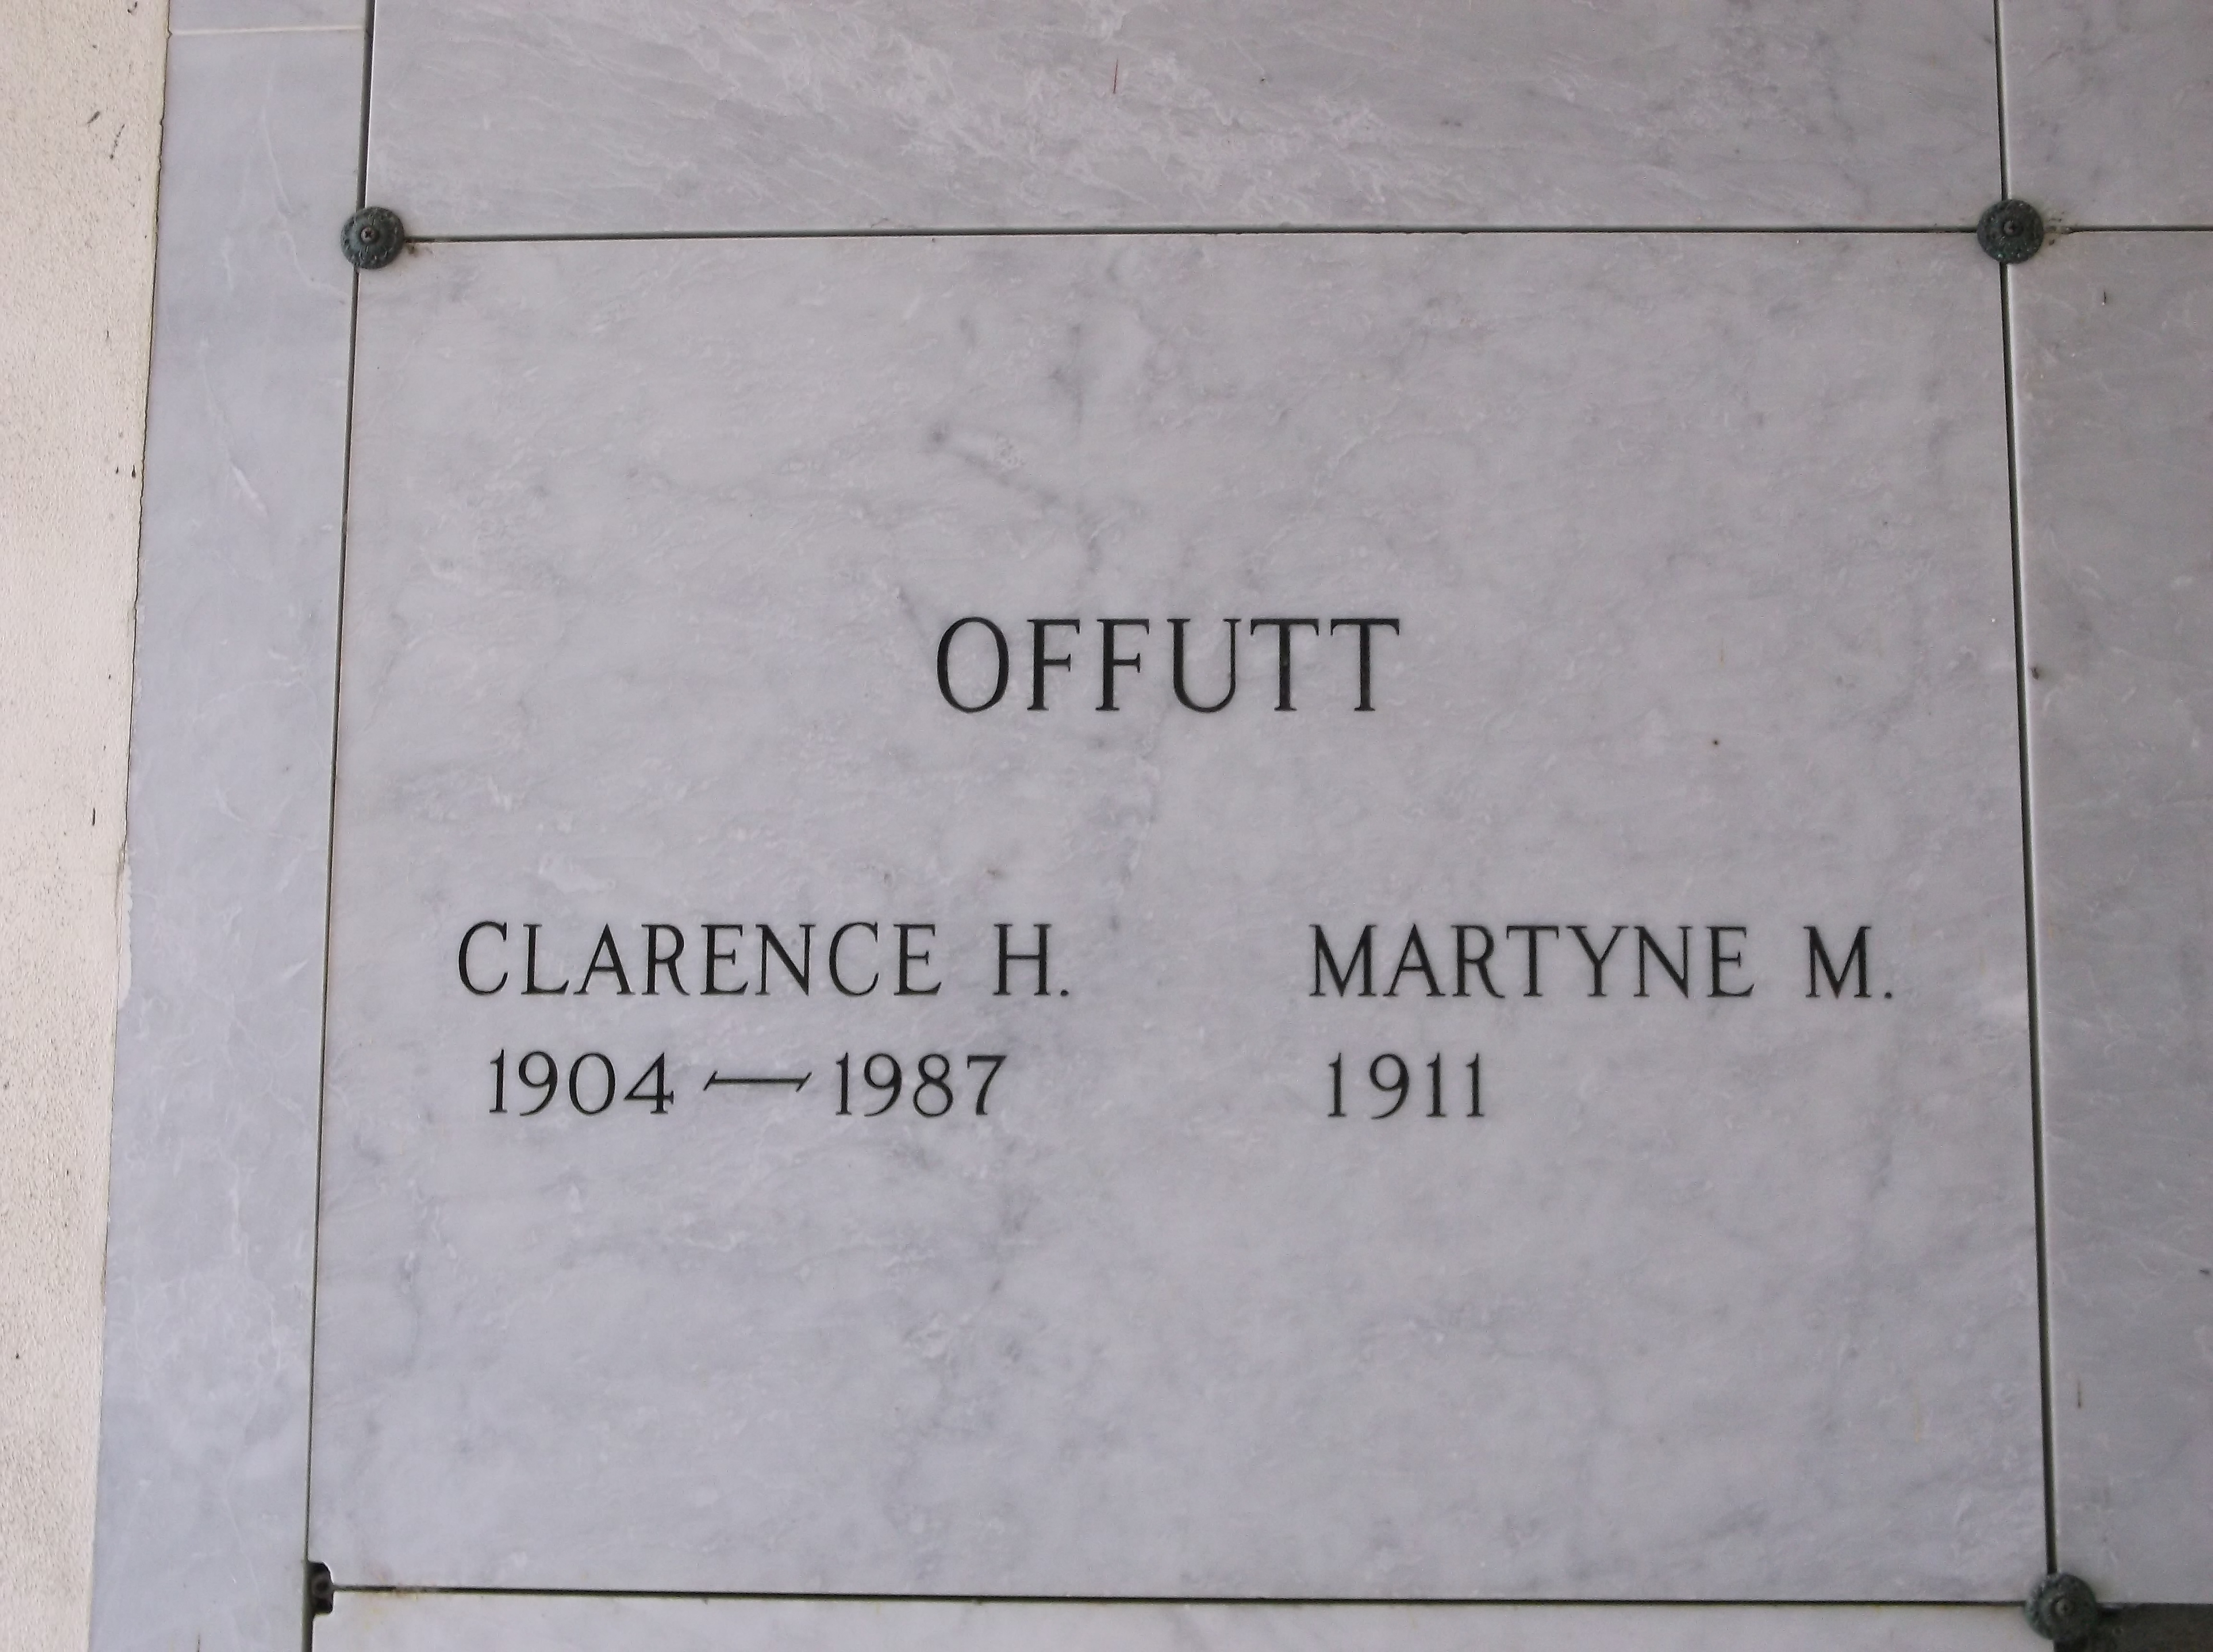 Clarence H Offutt